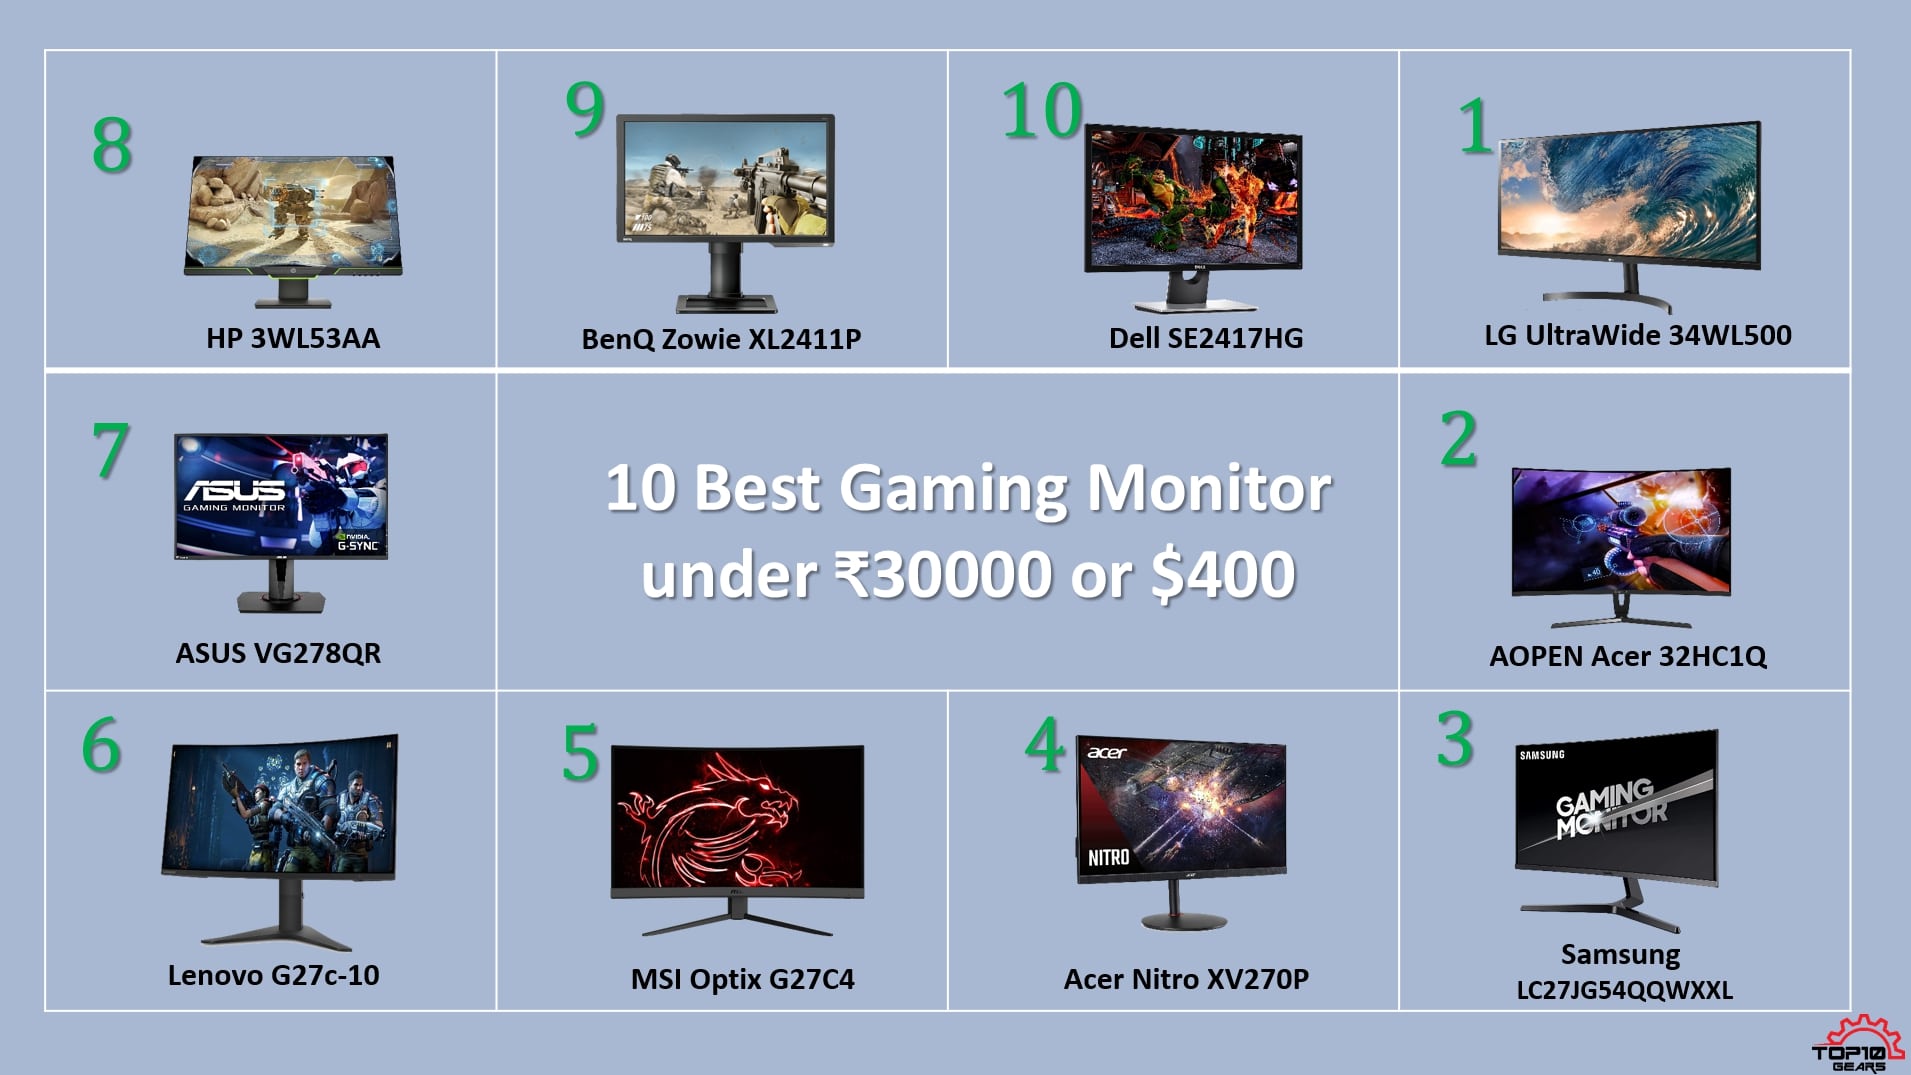 Best Gaming Monitor Under 30000